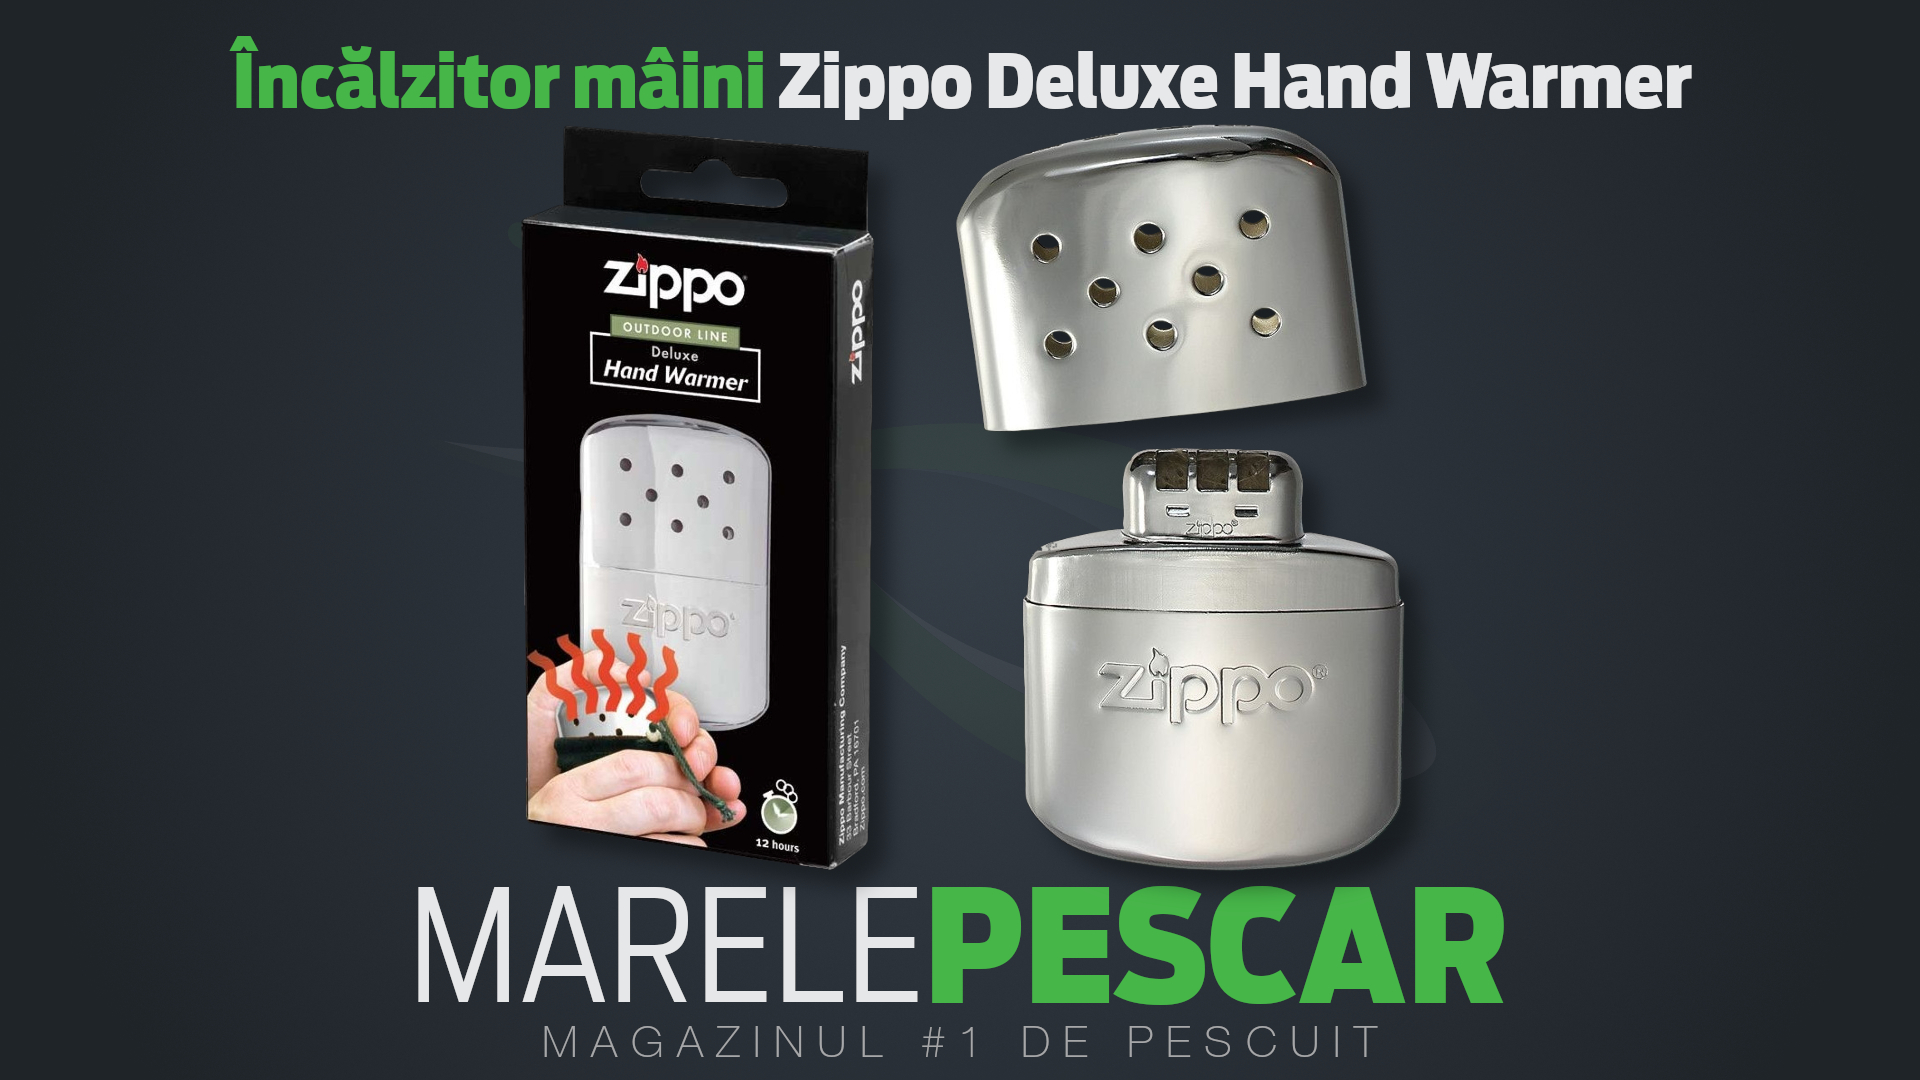 Incalzitor maini Zippo Deluxe Hand Warmer